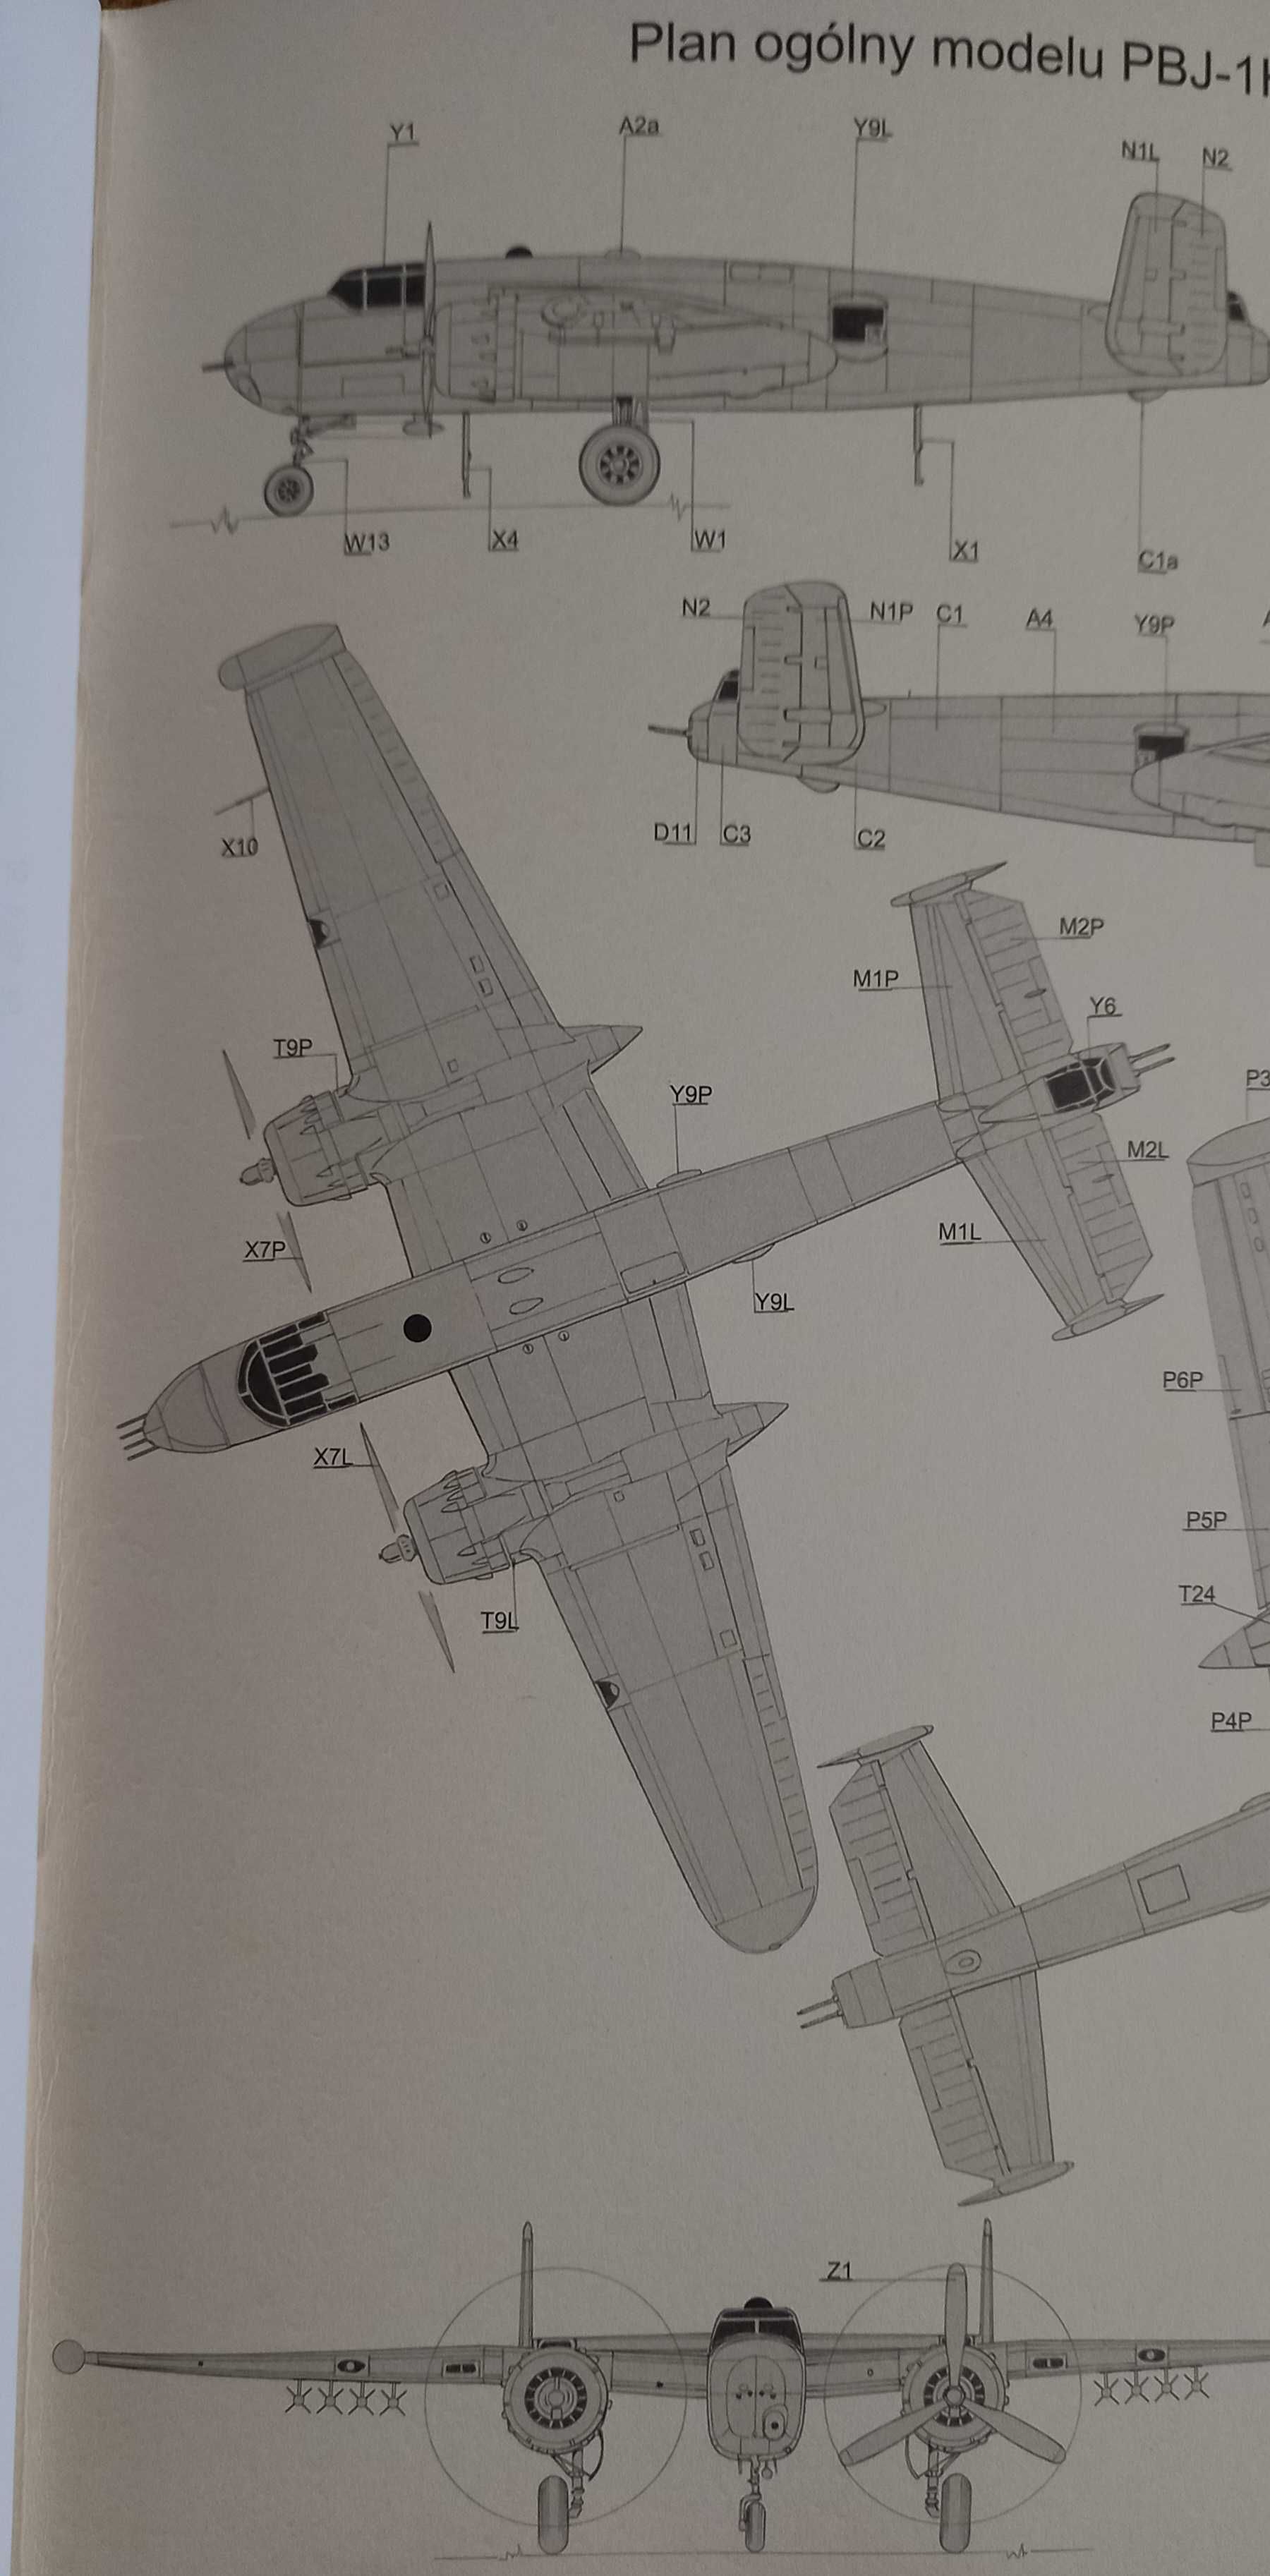 Model kartonowy bombowca PBJ-1H, wydawnictwo Orlik.